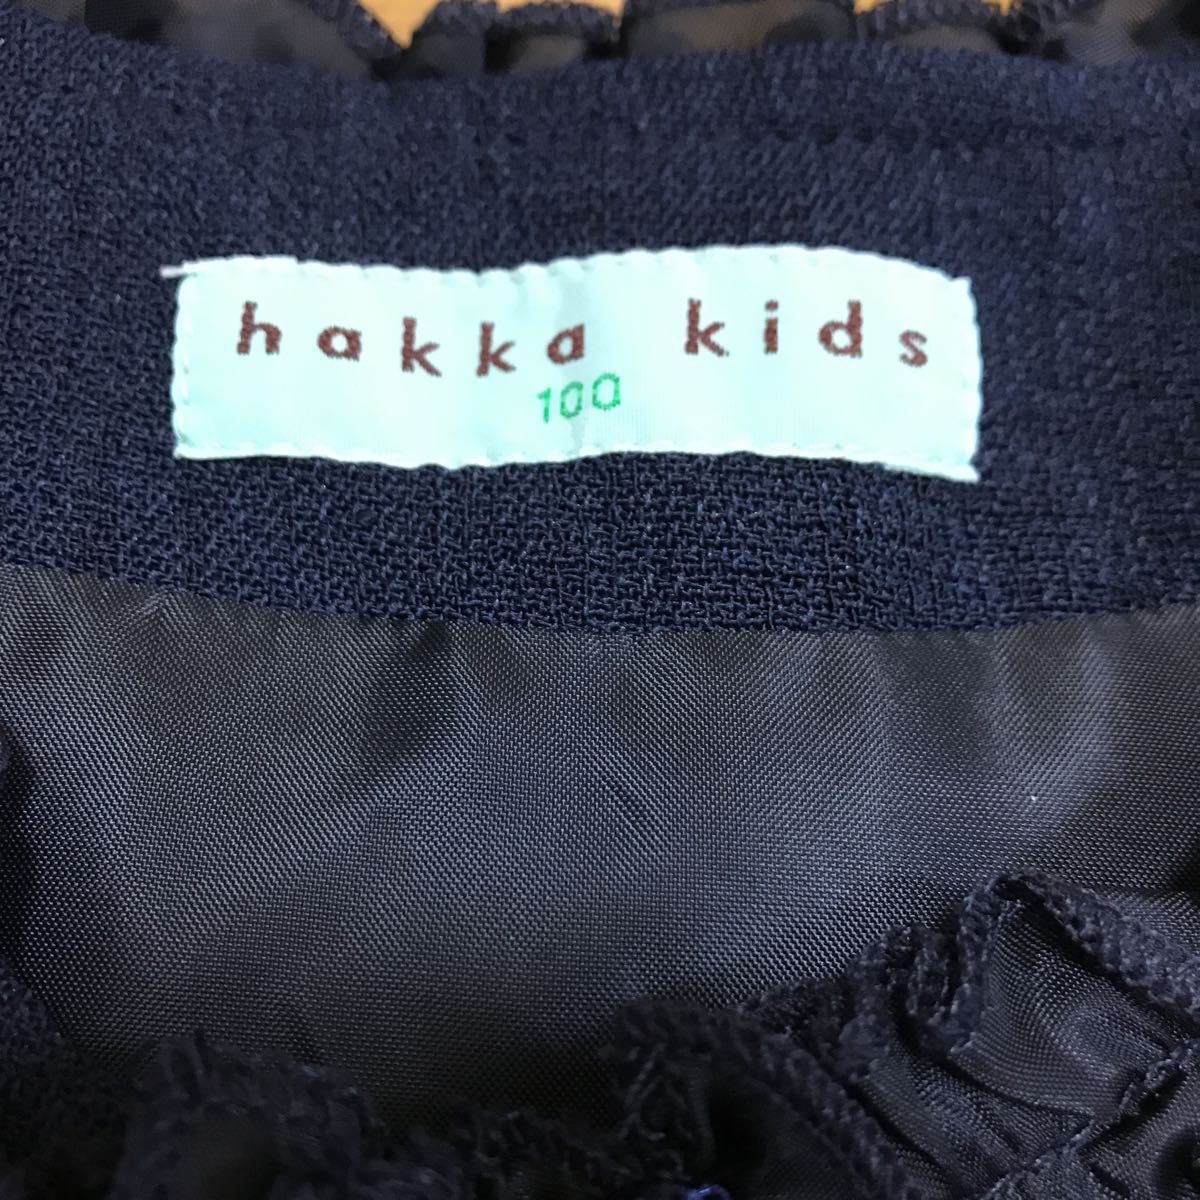  free shipping # unused # new goods hakka kids is ka Kids navy frill jacket size 100.. type go in . type 